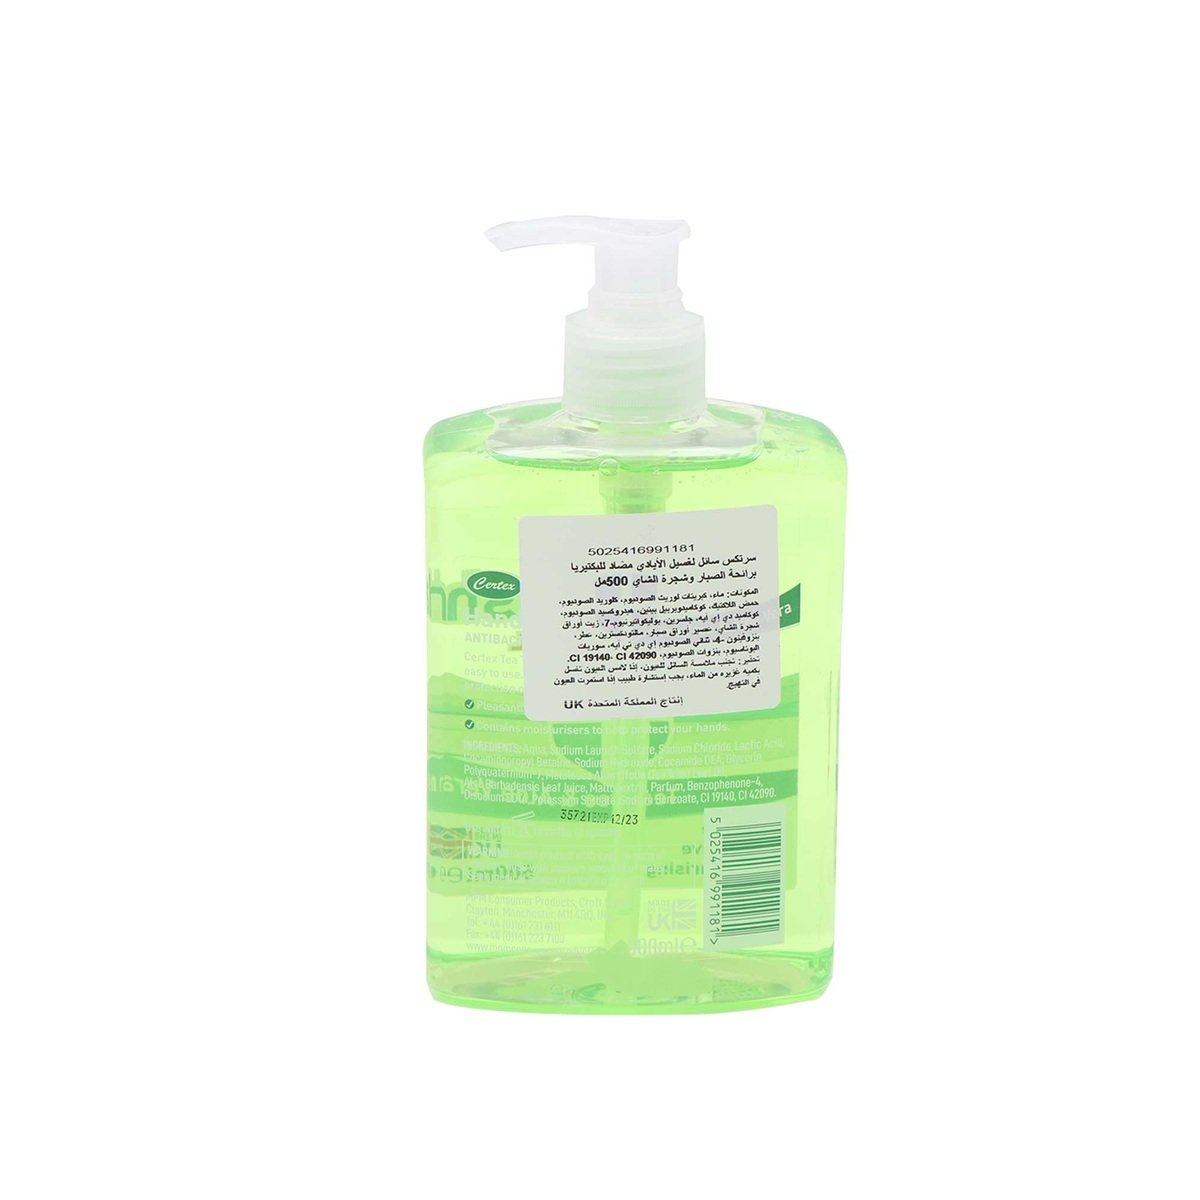 Certex Anti Bacterial Hand Wash Tea Tree & Aloe Vera 500ml